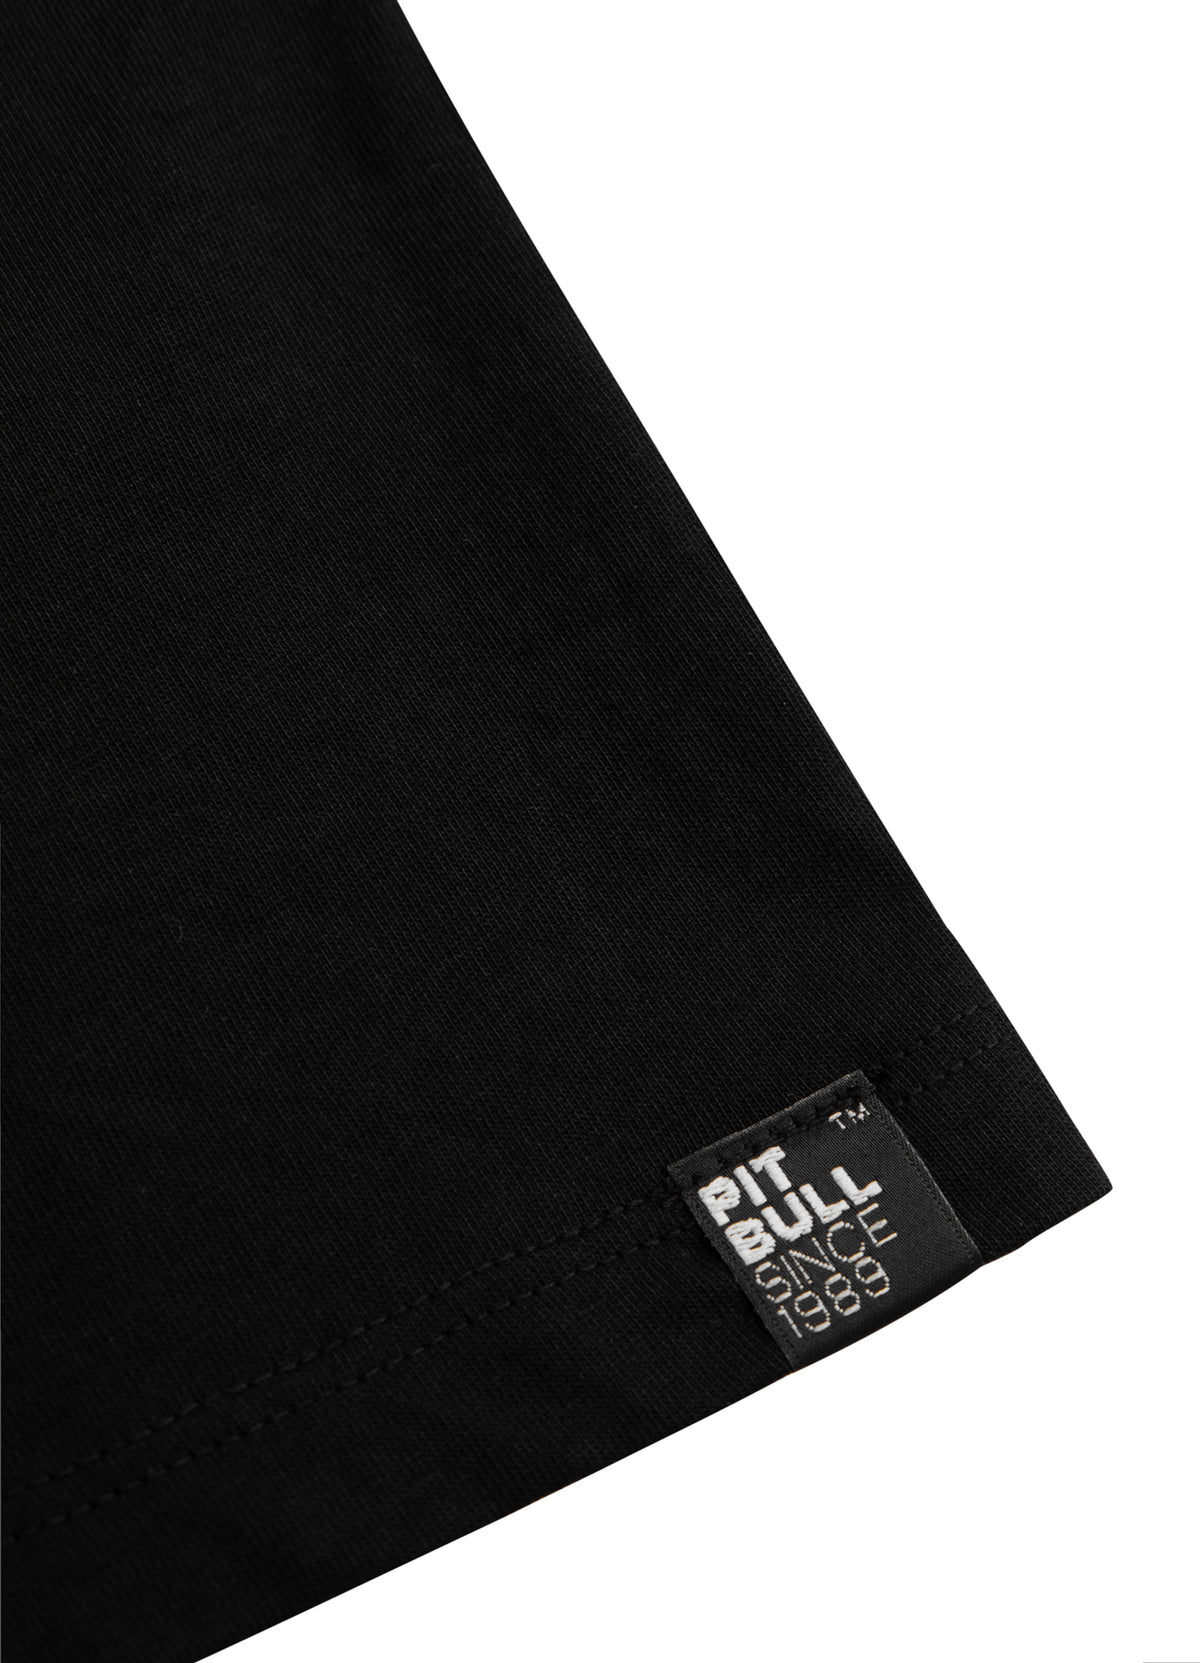 SWEETIE-CHU Black T-shirt